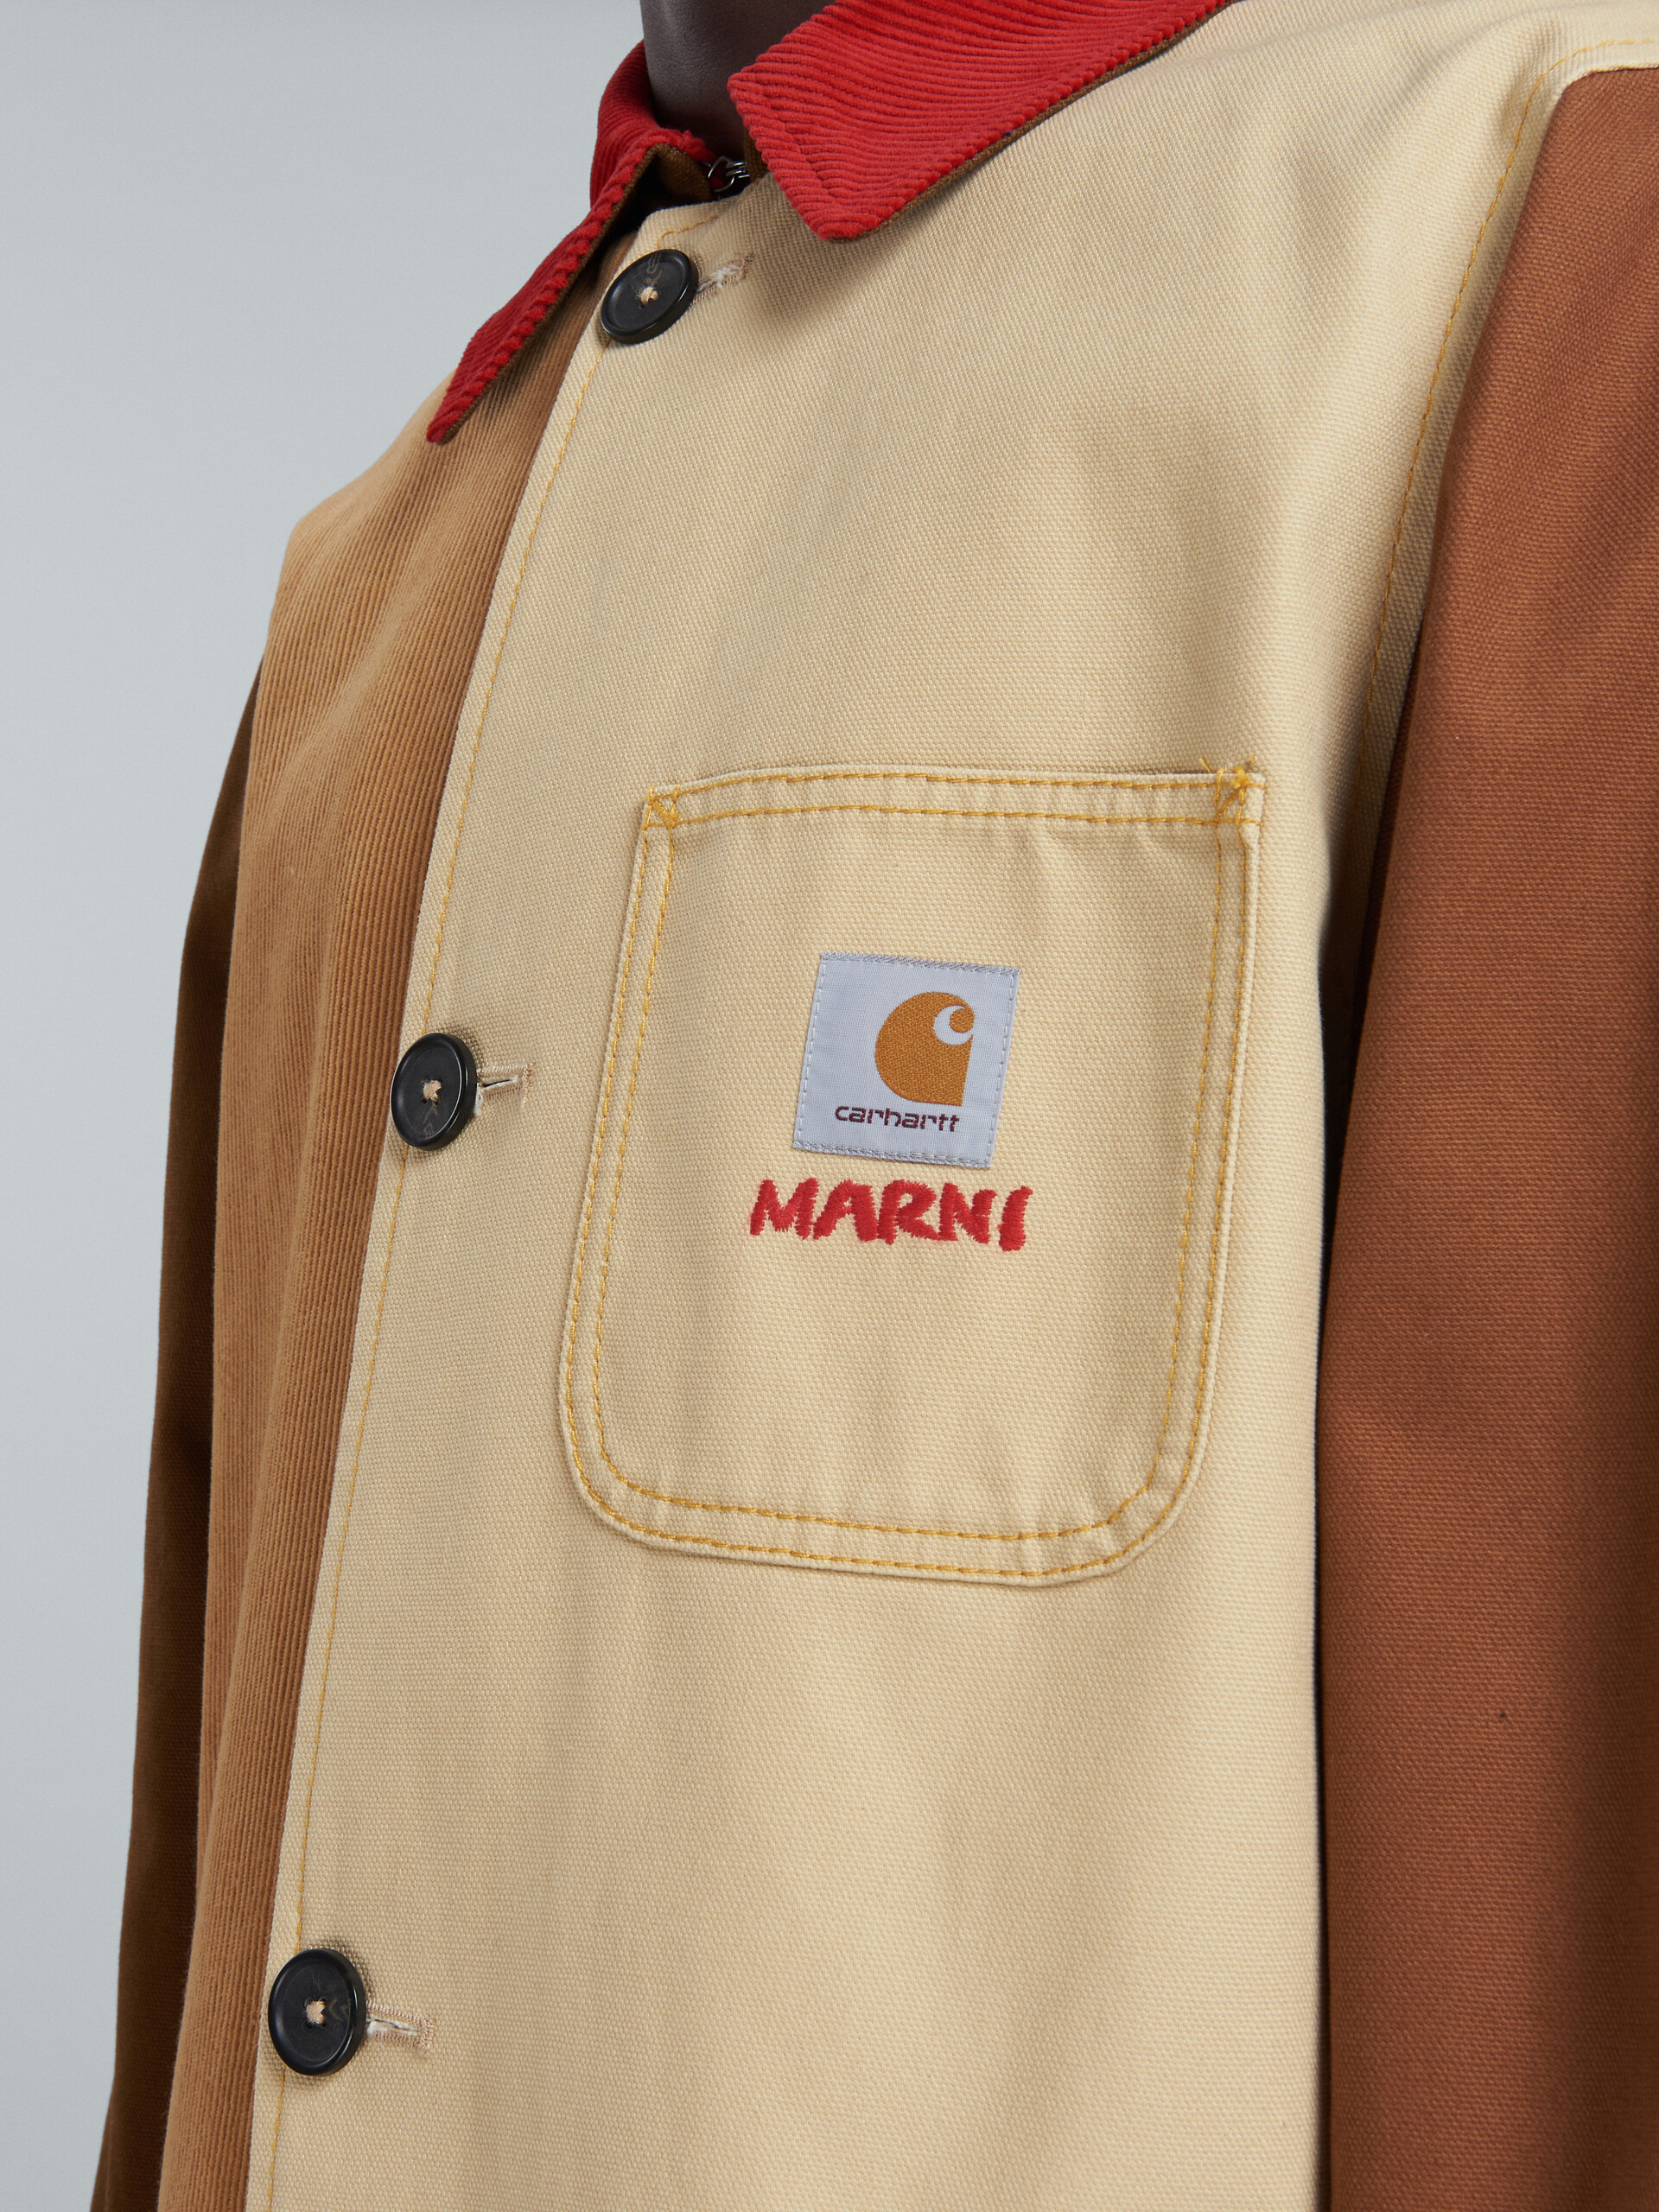 MARNI x CARHARTT WIP - Abrigo marrón motivo color block - Abrigos - Image 5